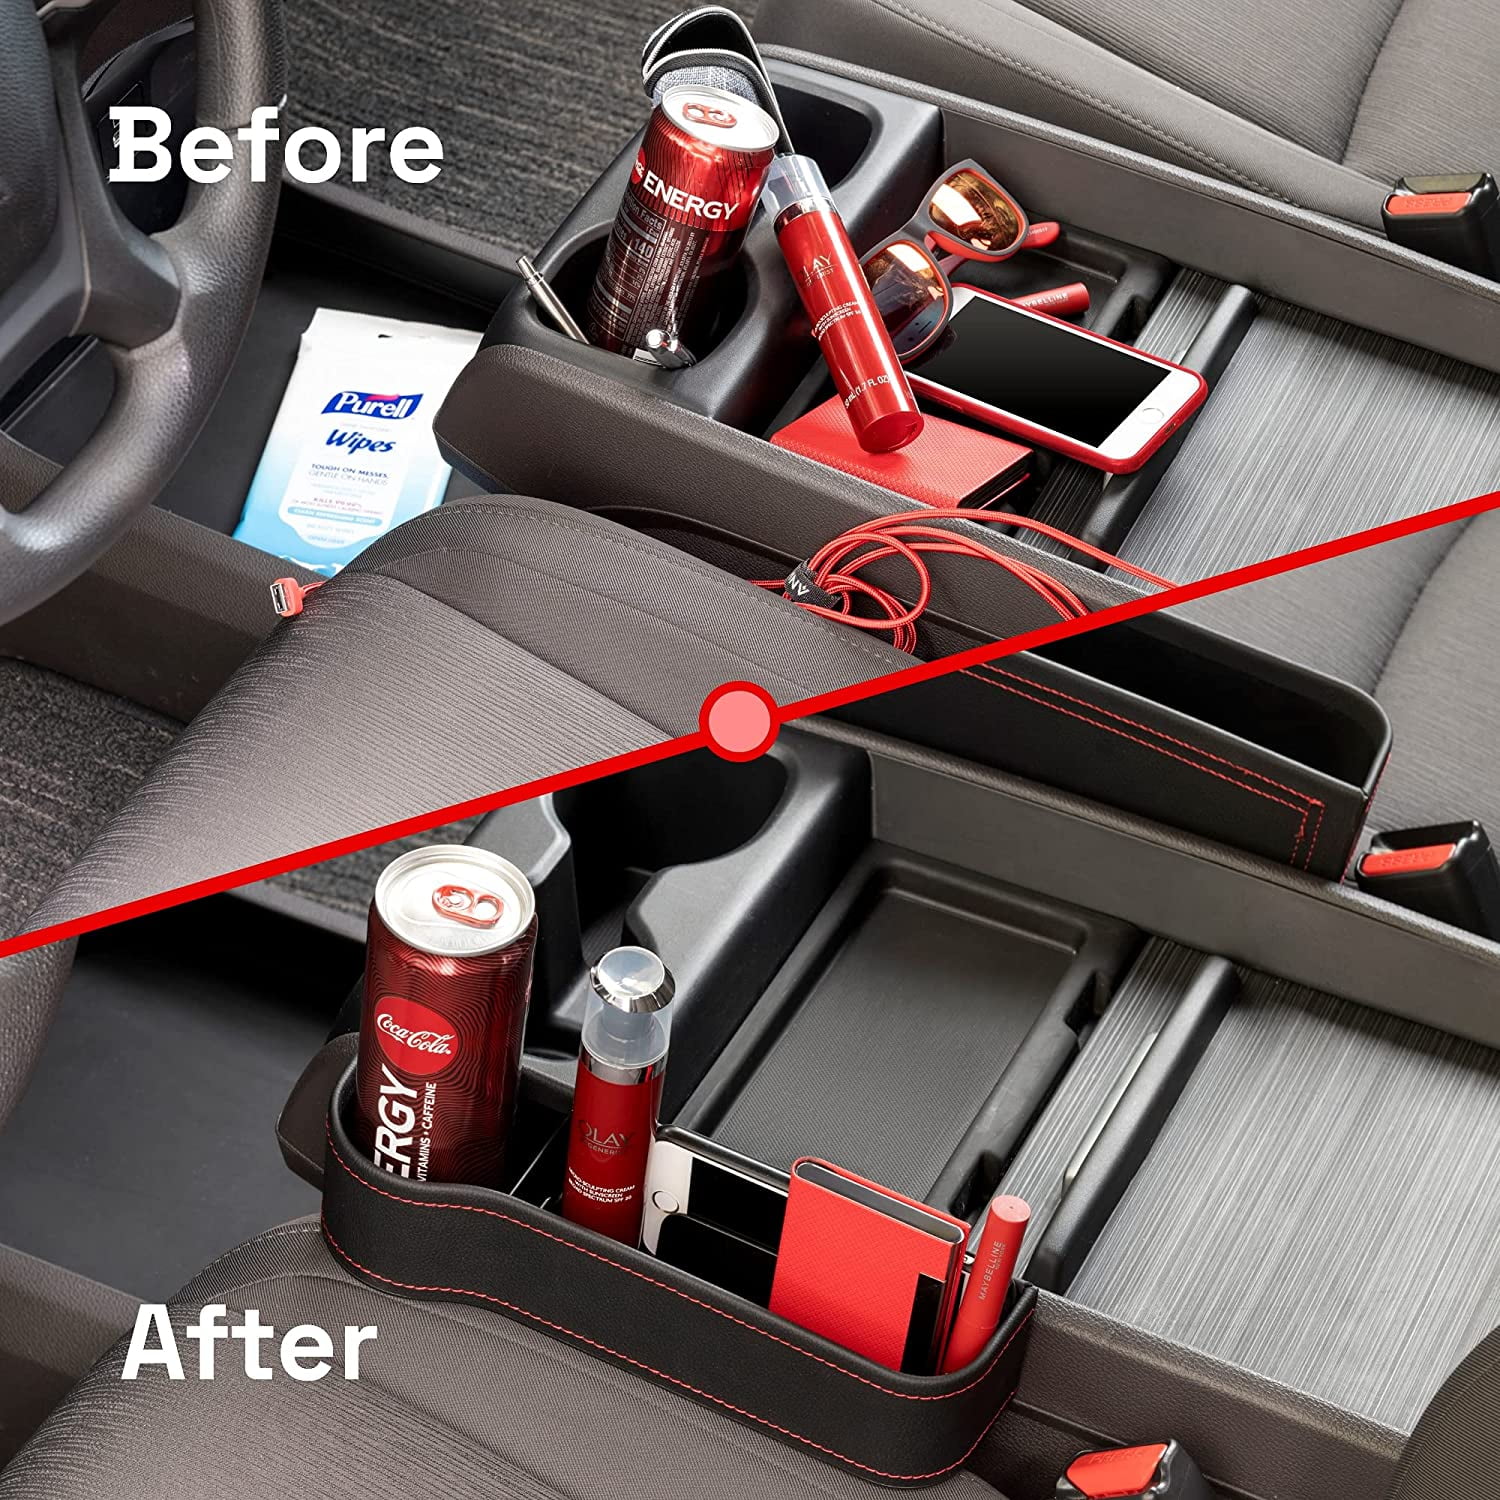 Vakdon Car Seat Gap Filler 2 Pack, Universal Organizer for Car SUV Truck to  Fill The Gap Between Seat and Console, Car Seat Gap Plug Strip Filler